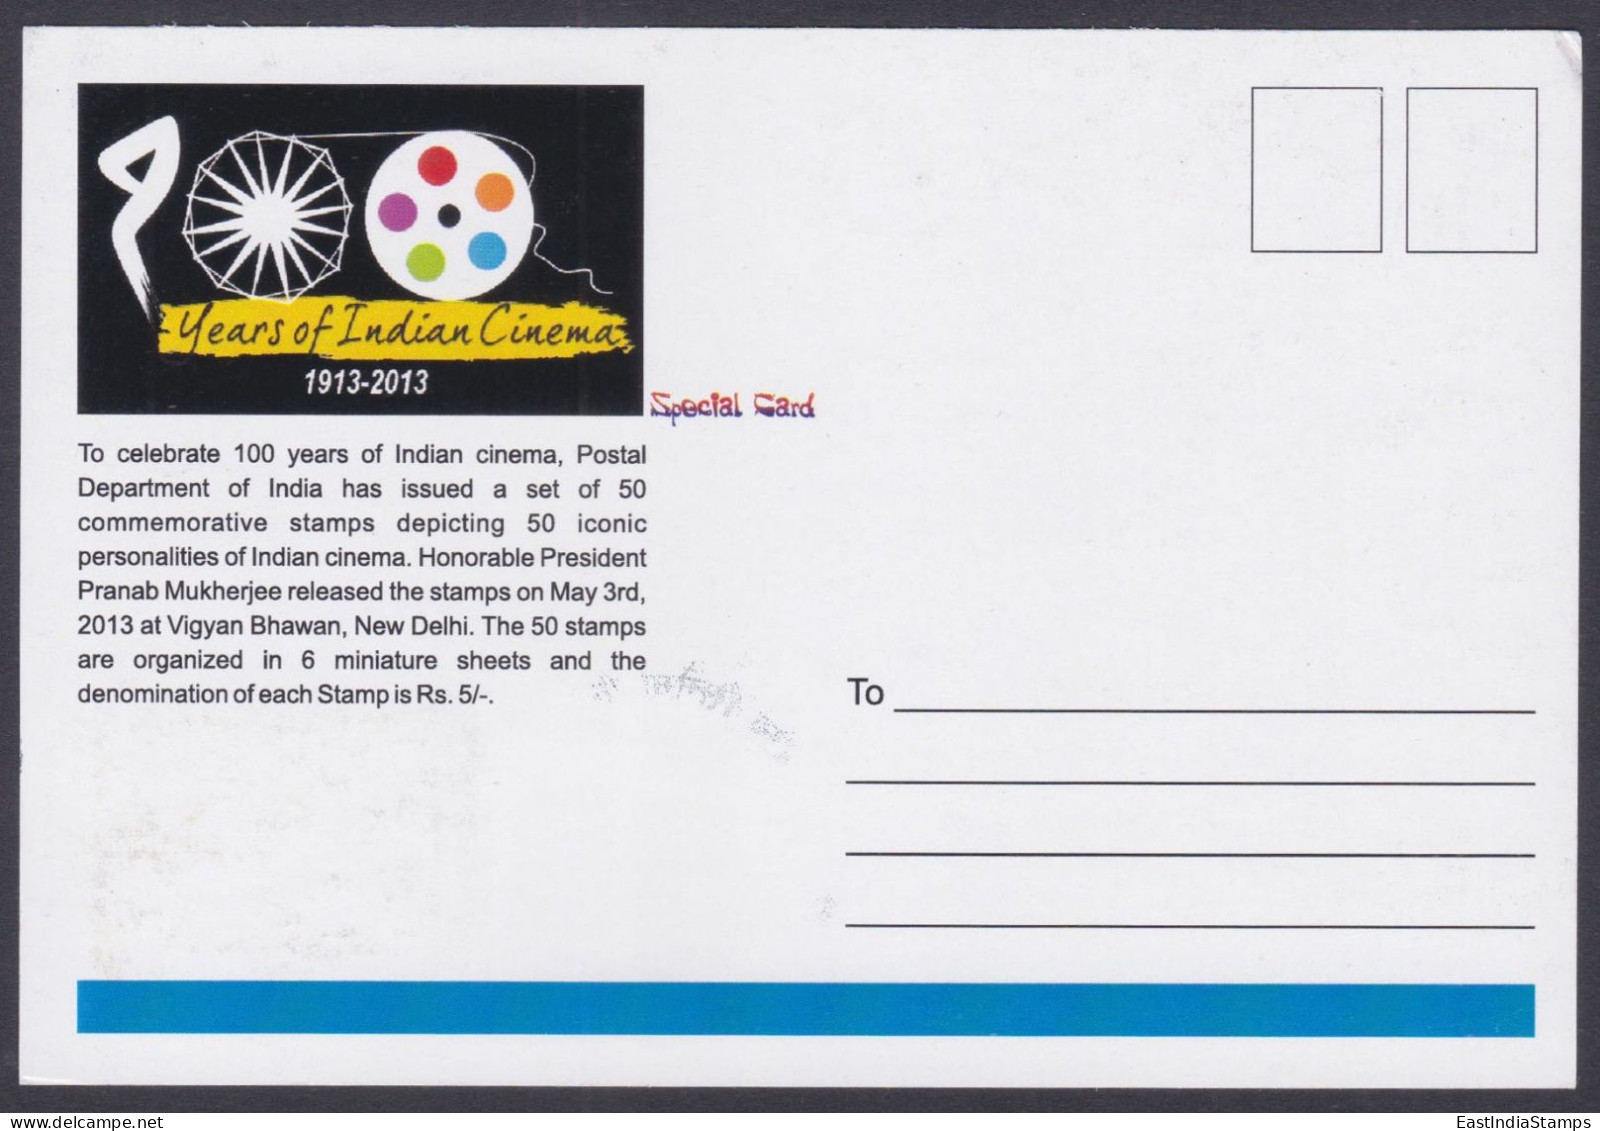 Inde India 2013 Maximum Max Card Bhalji Pendharkar, Silent Film Director, Producer,  Bollywood Indian Hindi Cinema, Film - Lettres & Documents